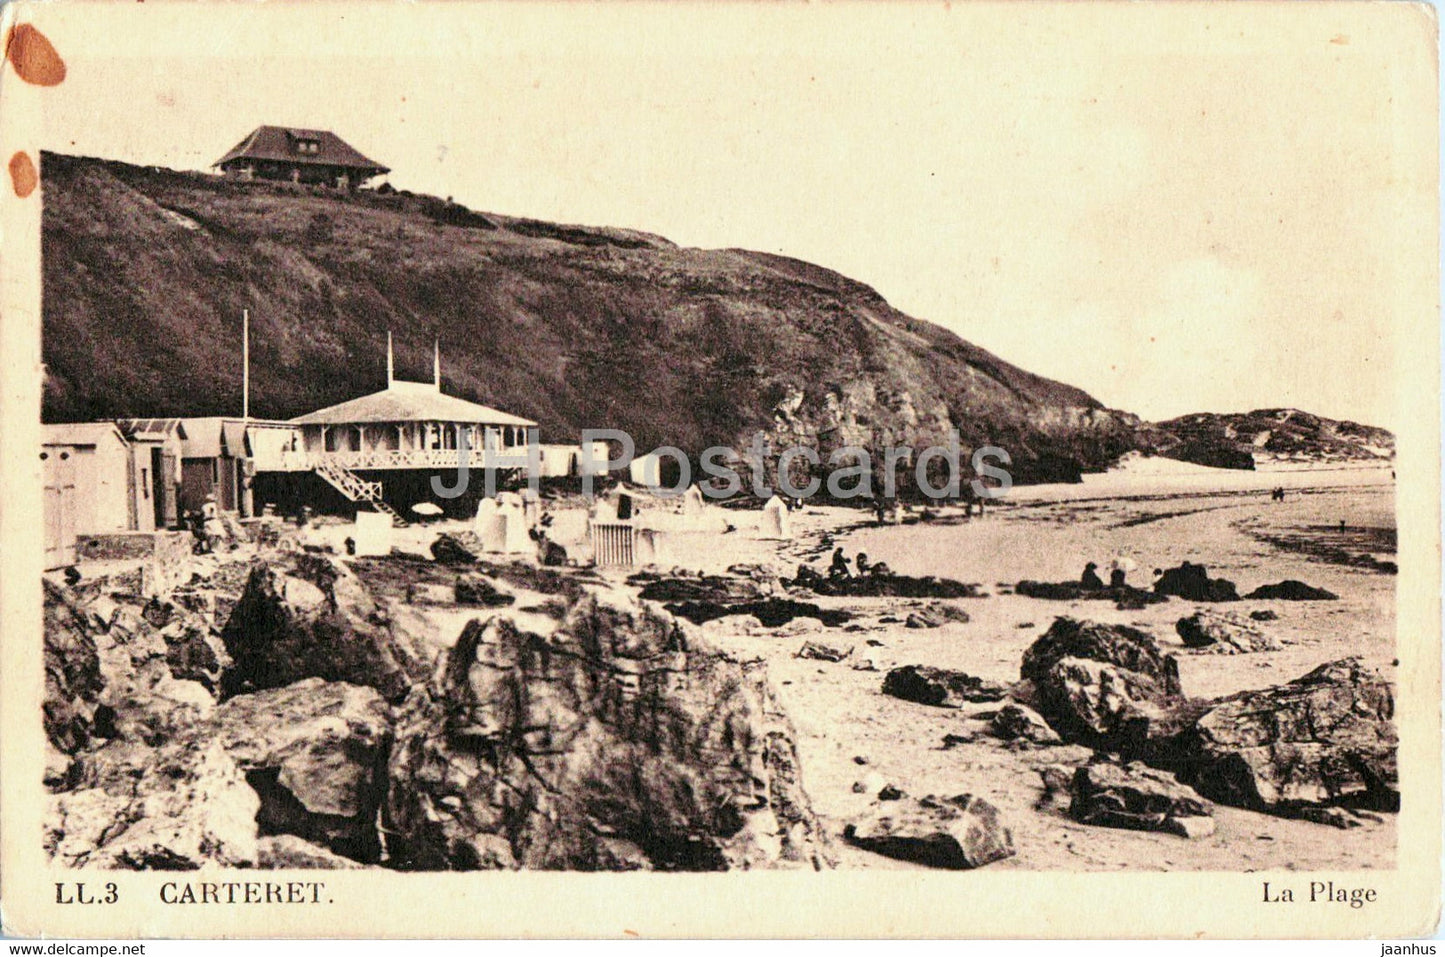 Carteret - La Plage - beach - 3 - old postcard - France - unused - JH Postcards